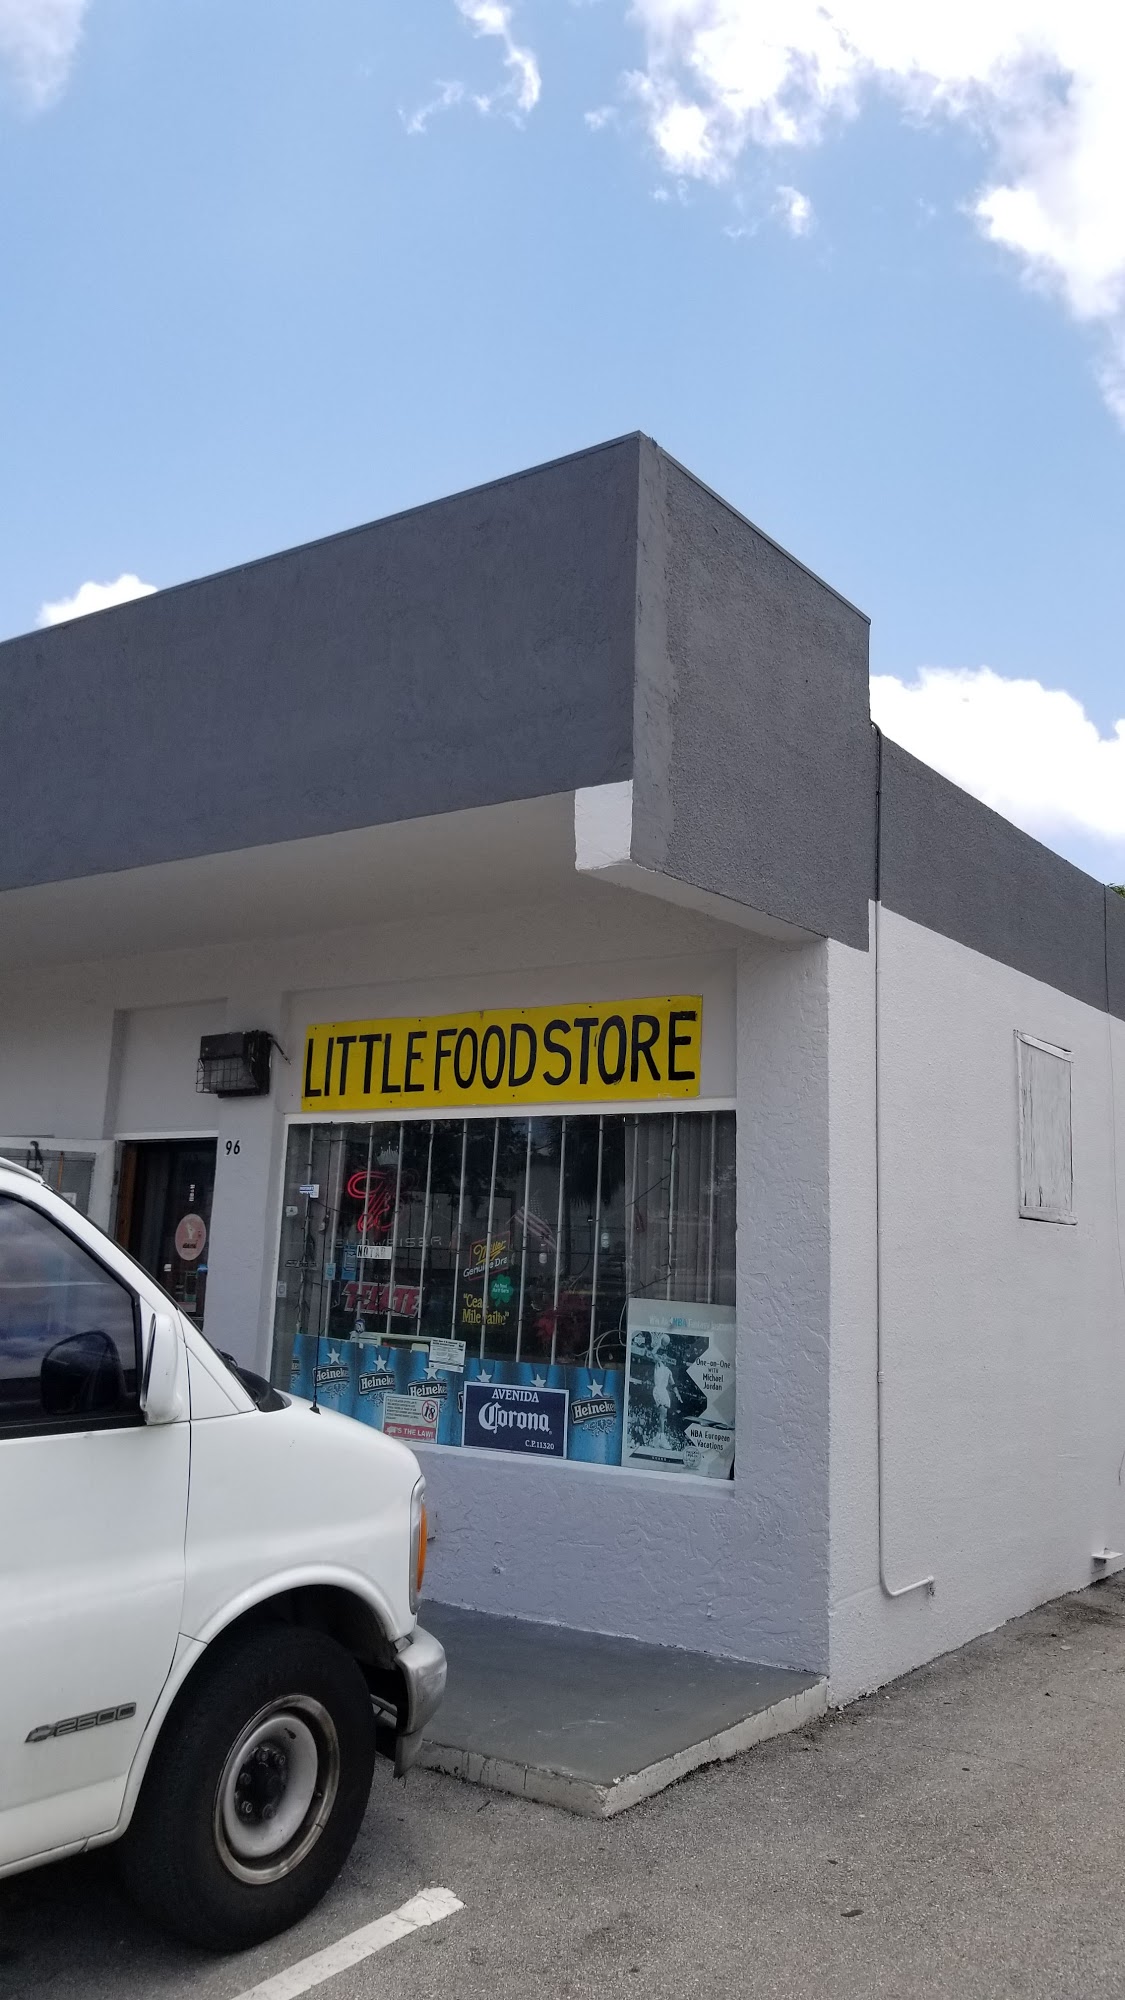 Little Store